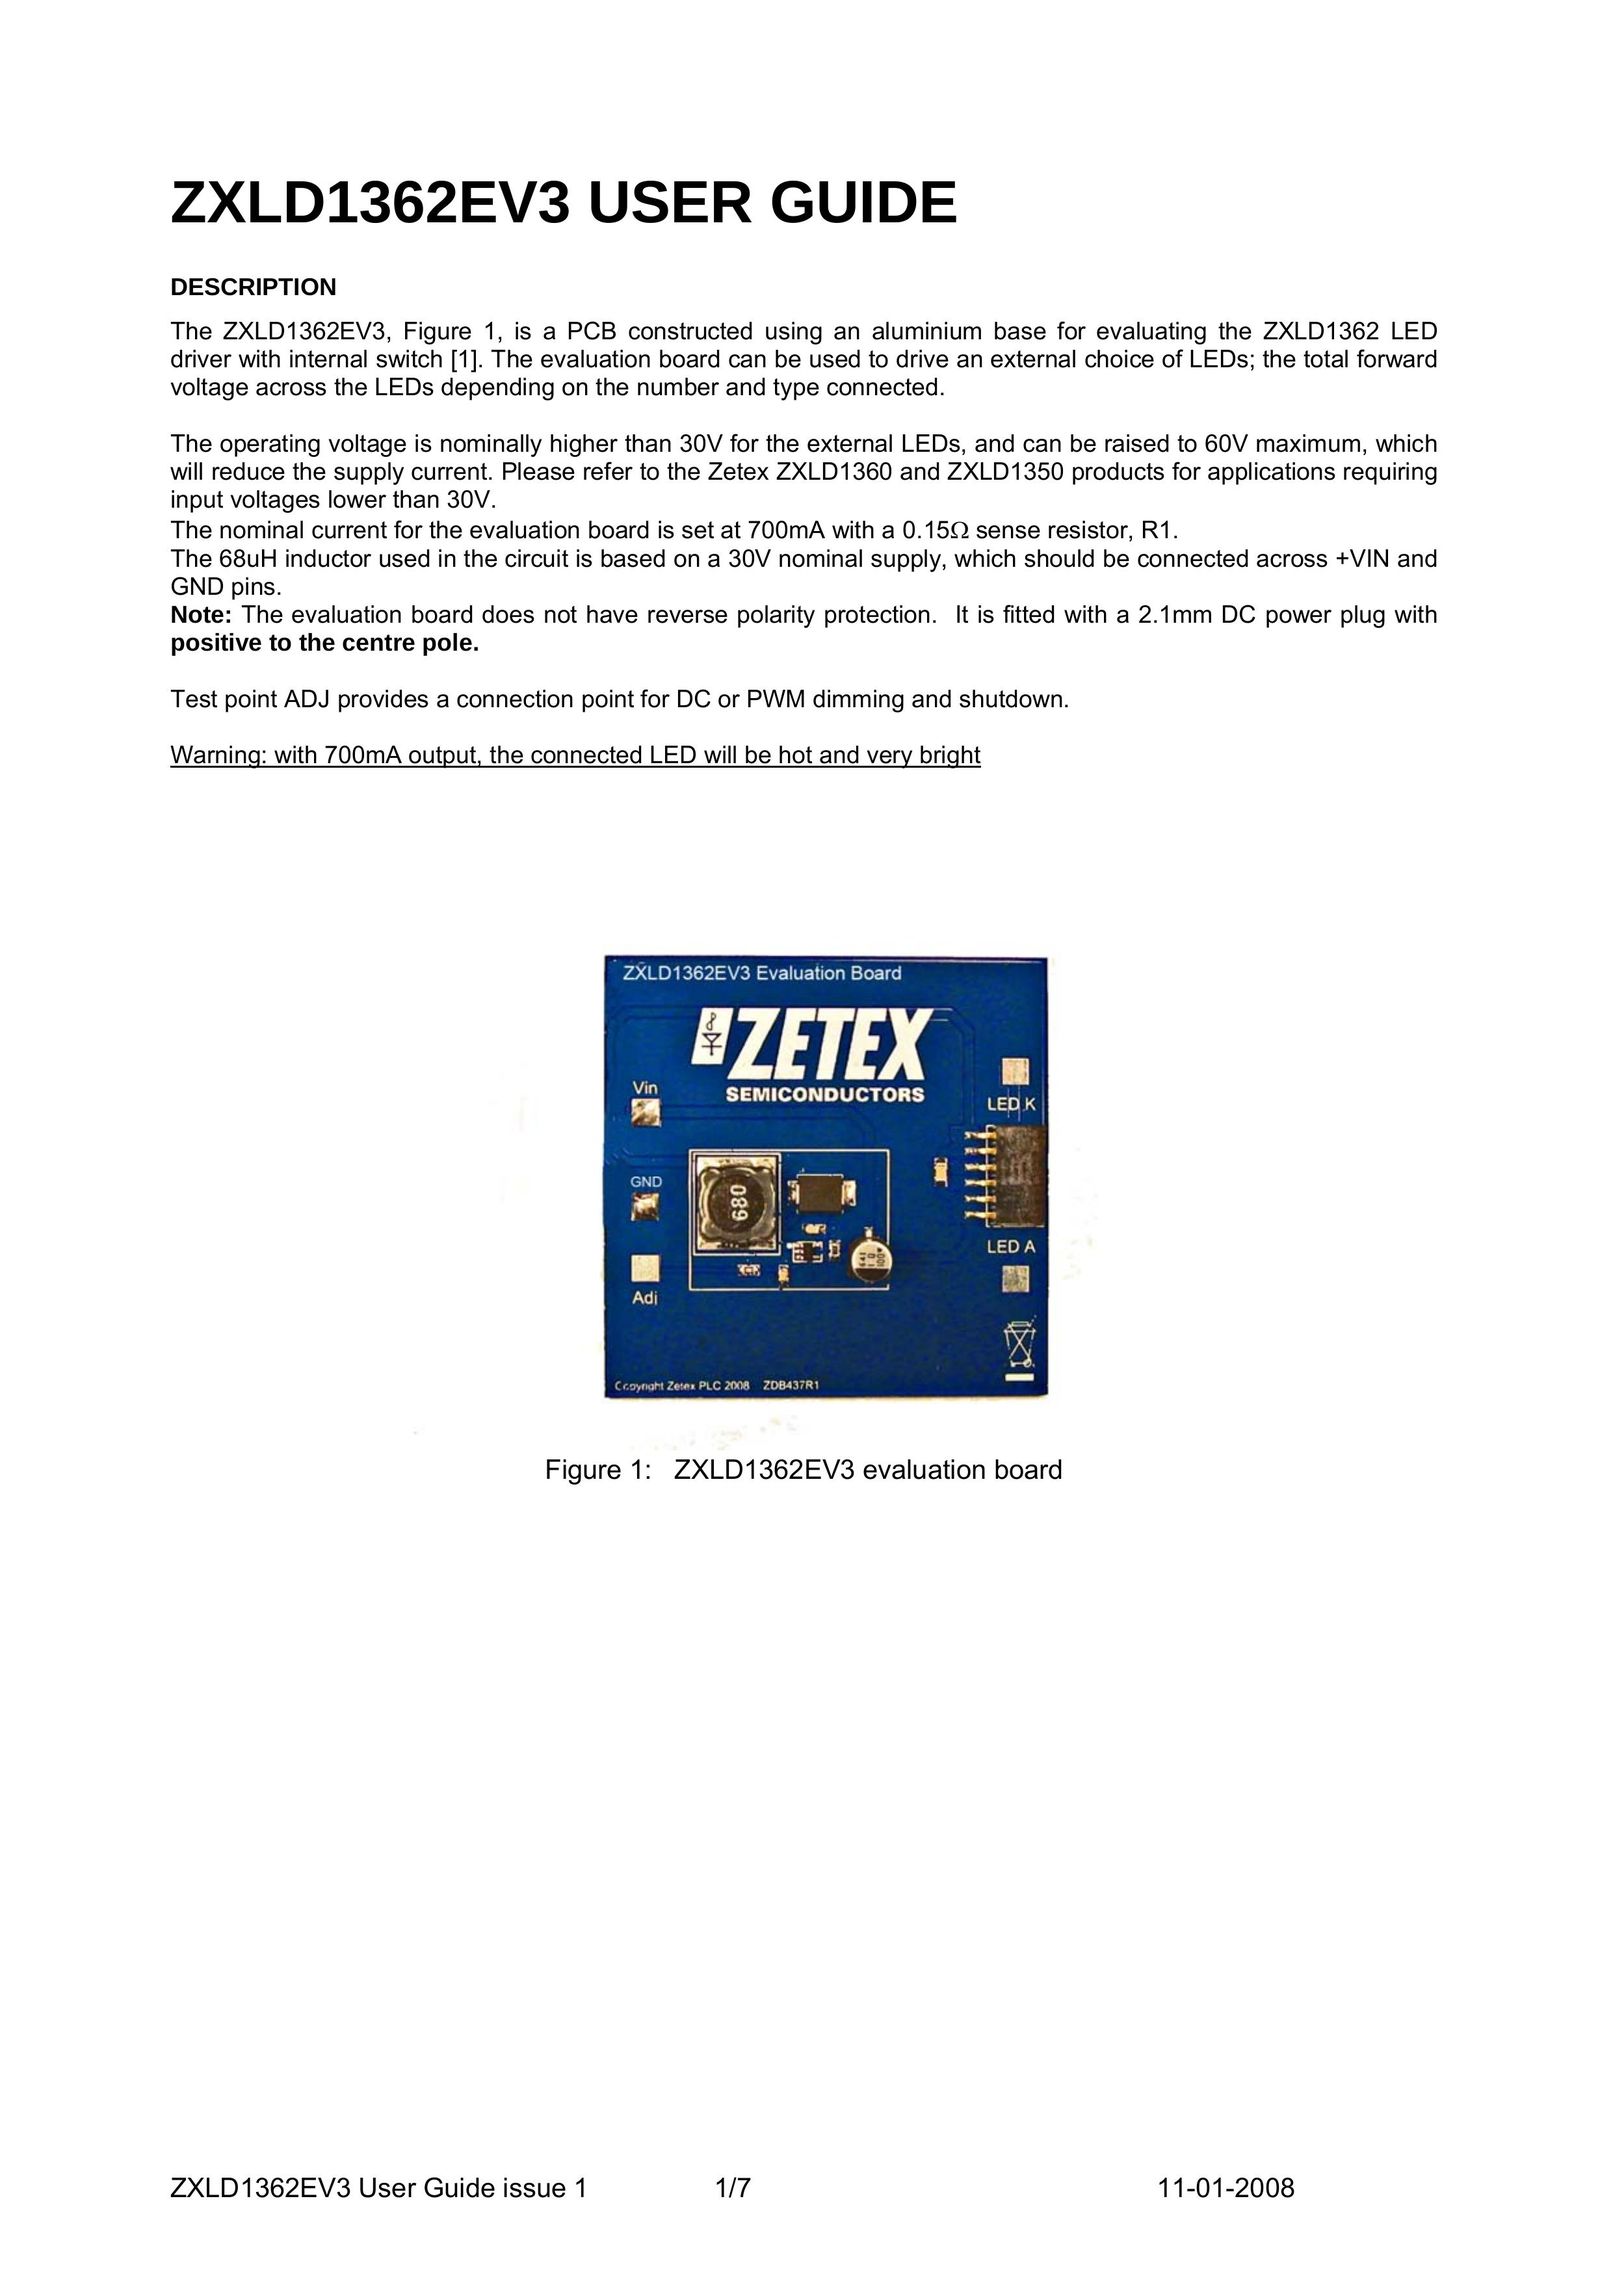 Zetex Semiconductors PLC ZXLD1362EV3 Computer Hardware User Manual